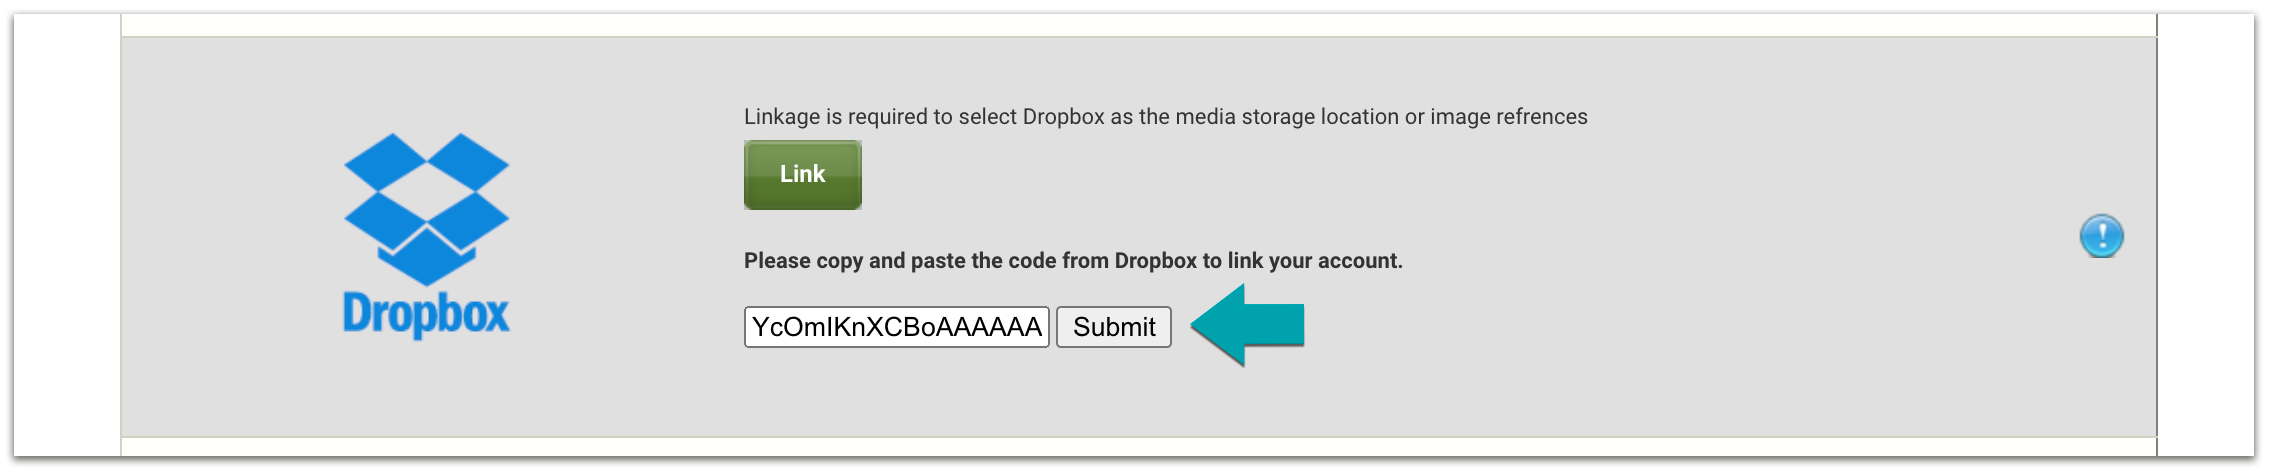 Link_Dropbox_Step_6.png